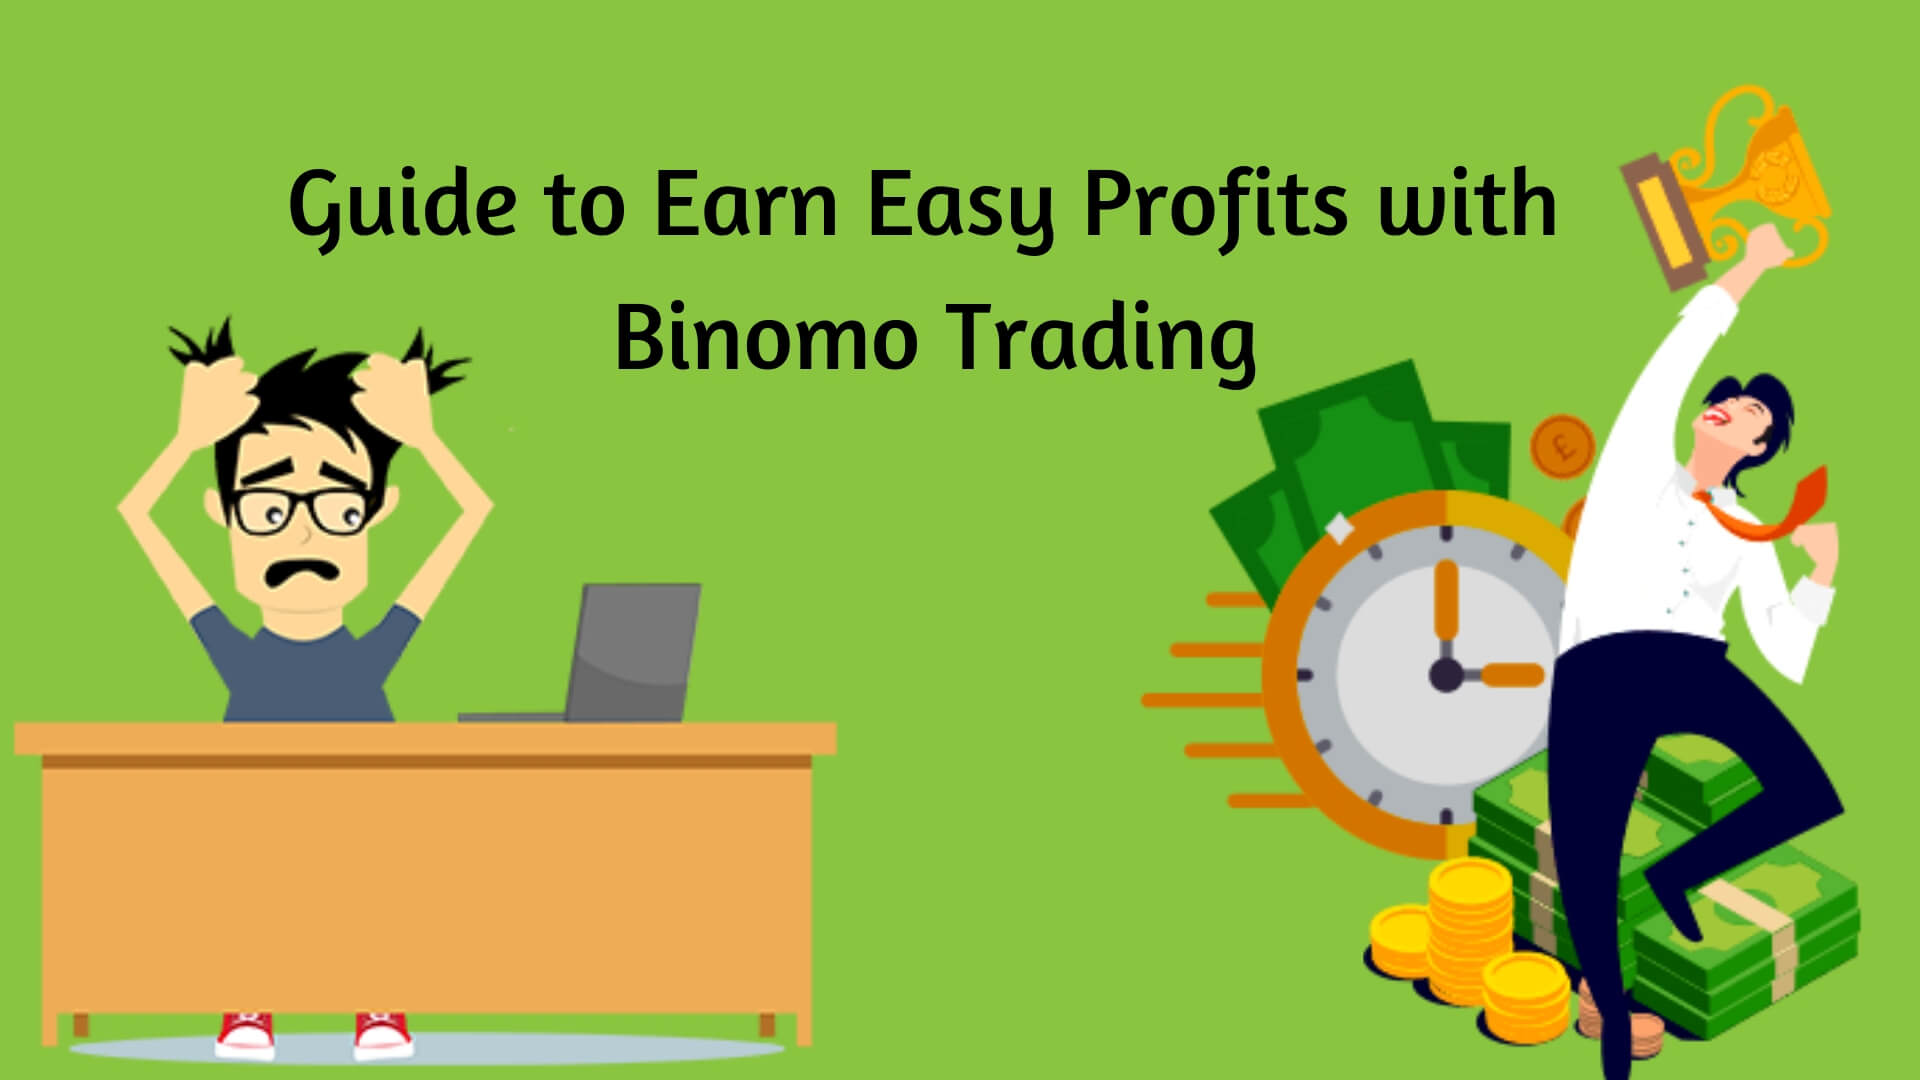 Guide To Earn Easy Profits With Binomo Trading - Binoption